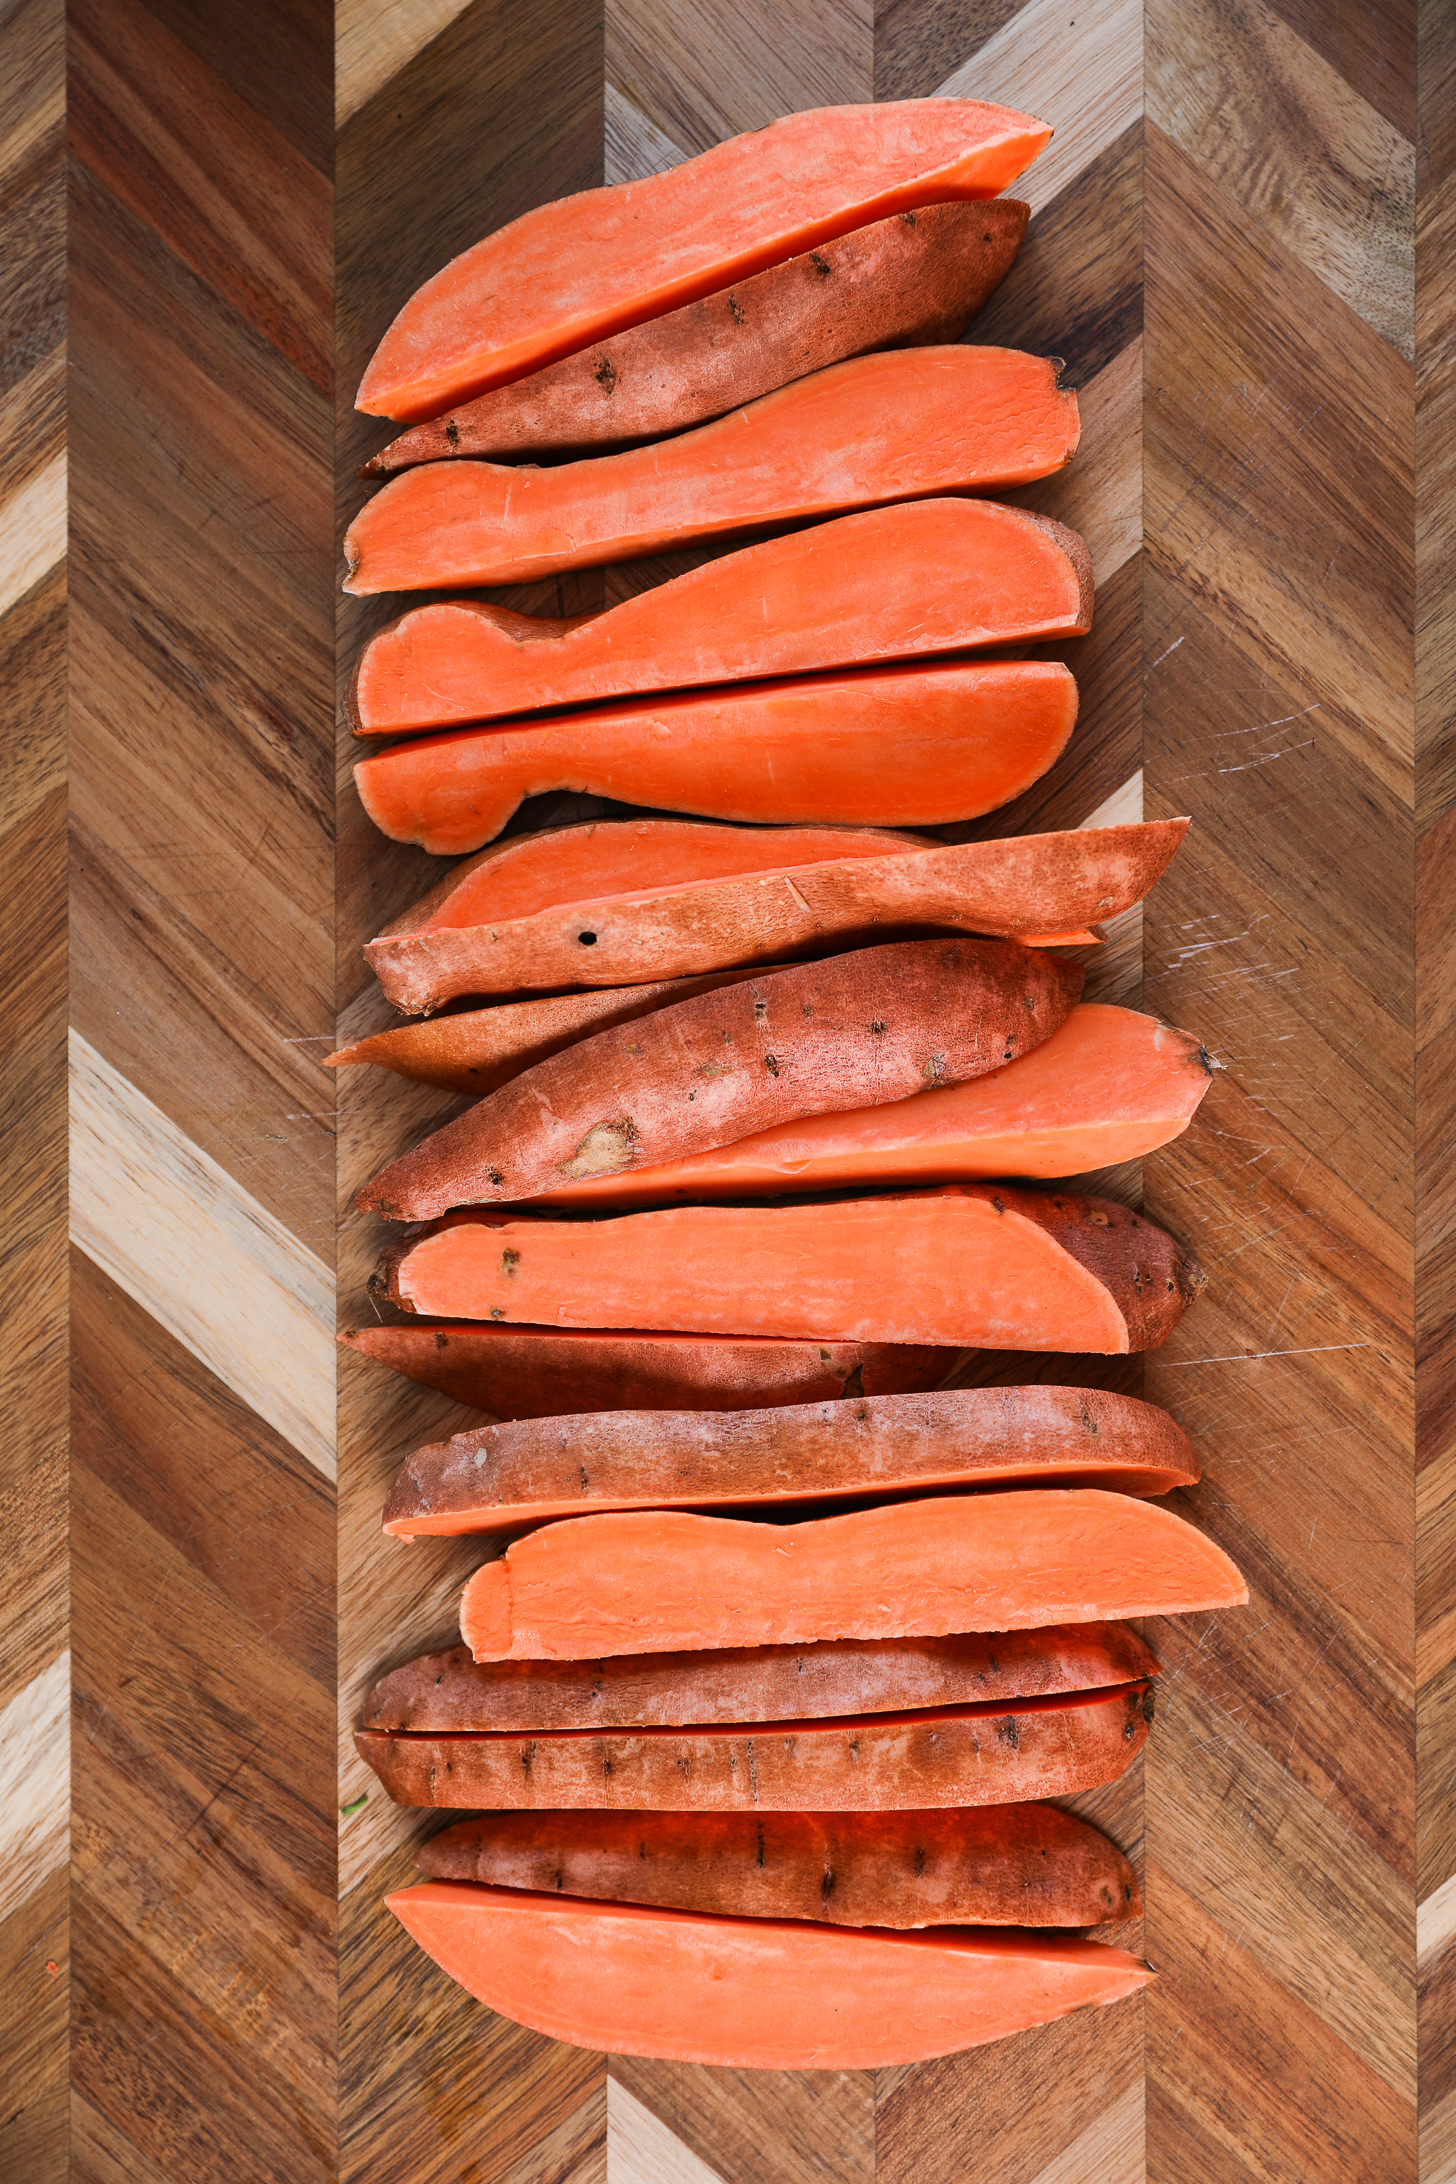 Raw sweet potato wedges neatly arranged on a wooden board.